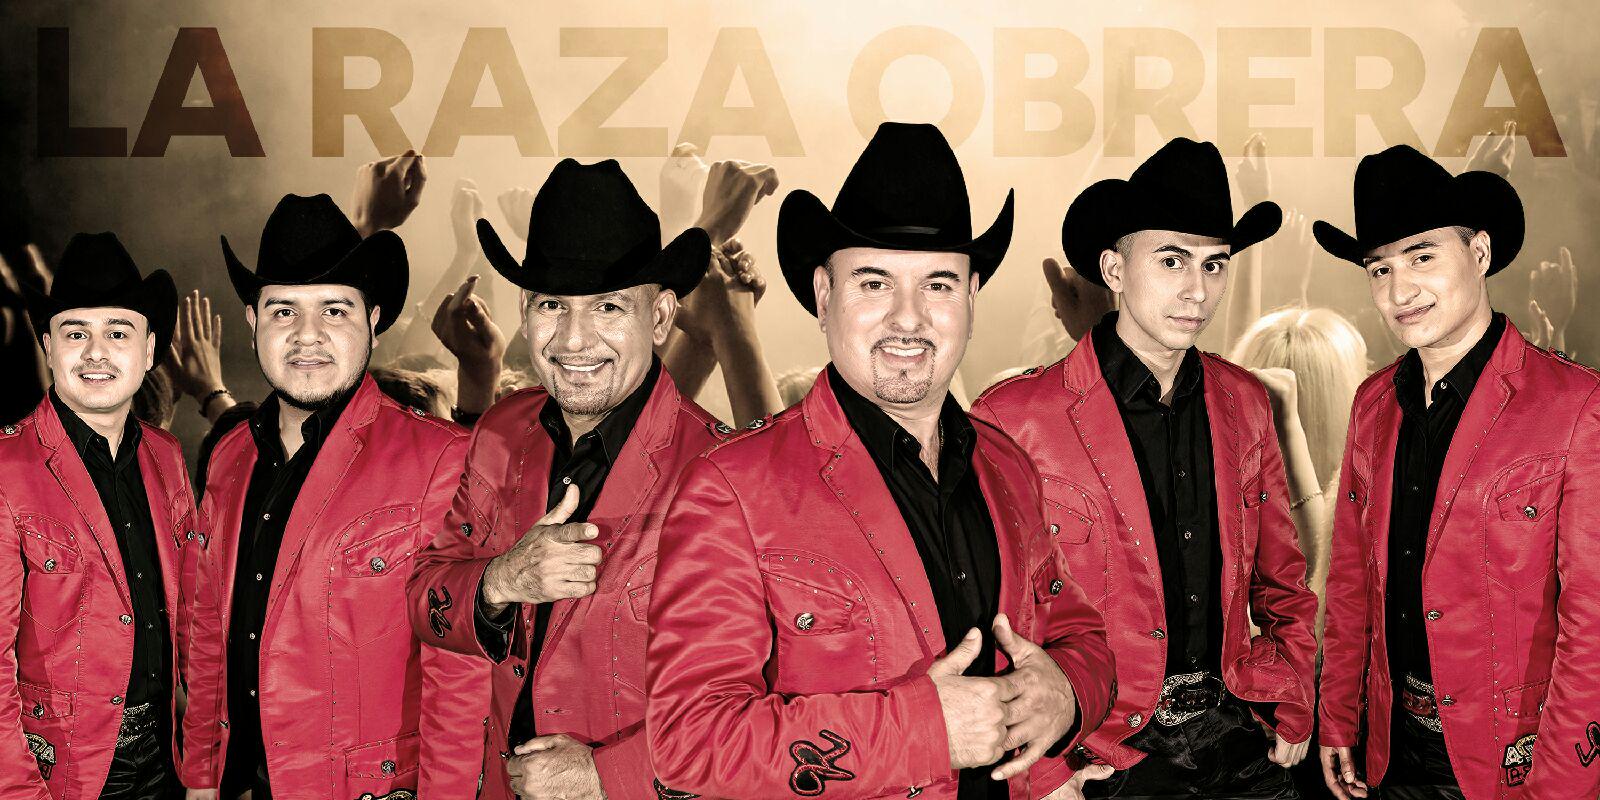 Raza Obrera at Casa Lopez Nightclub